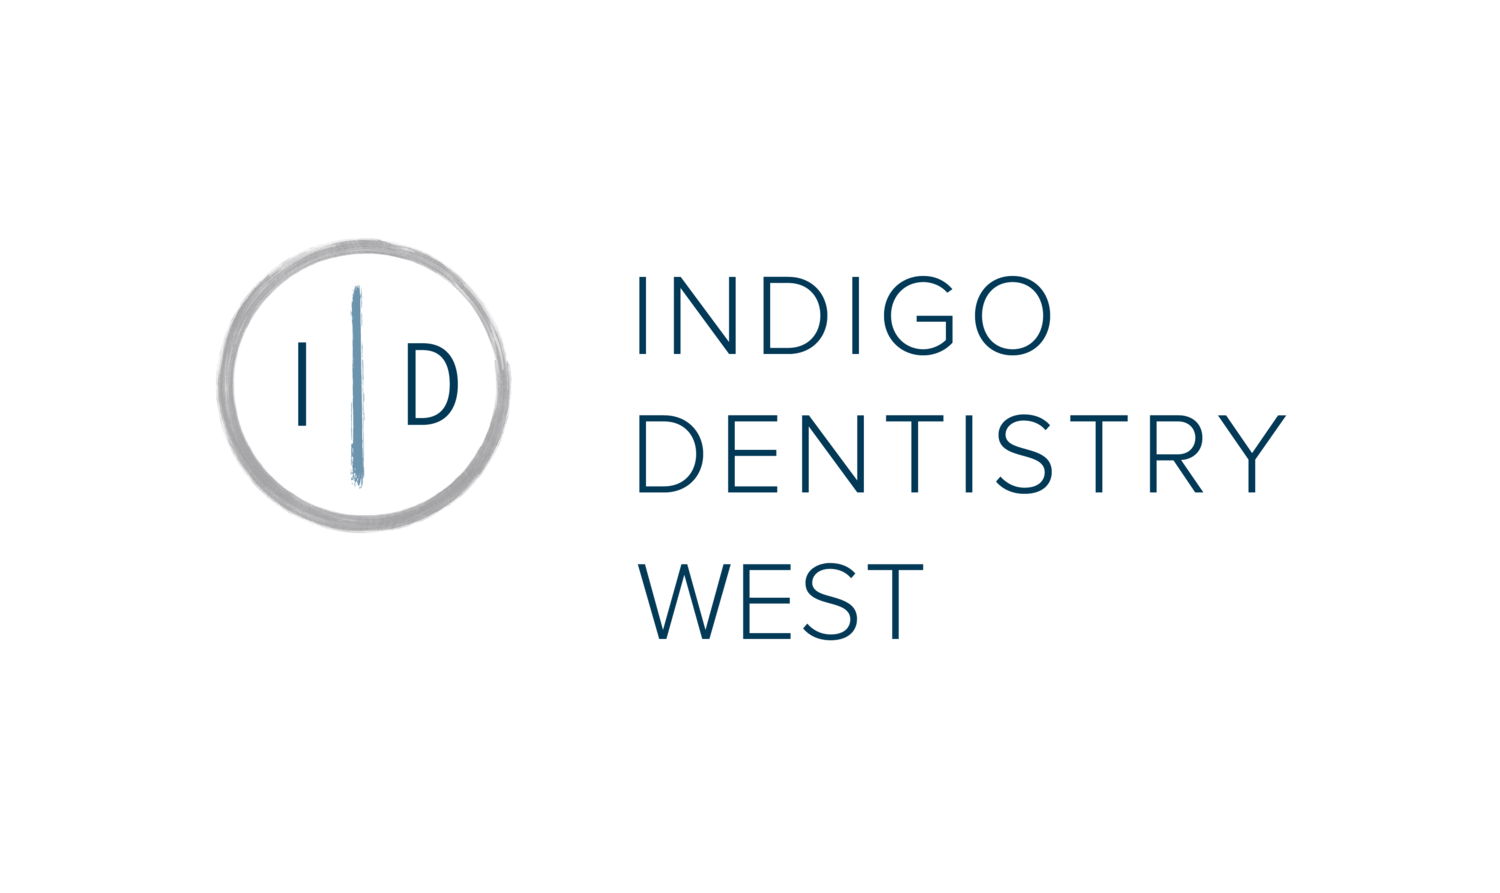 Company logo of Indigo Dentistry West